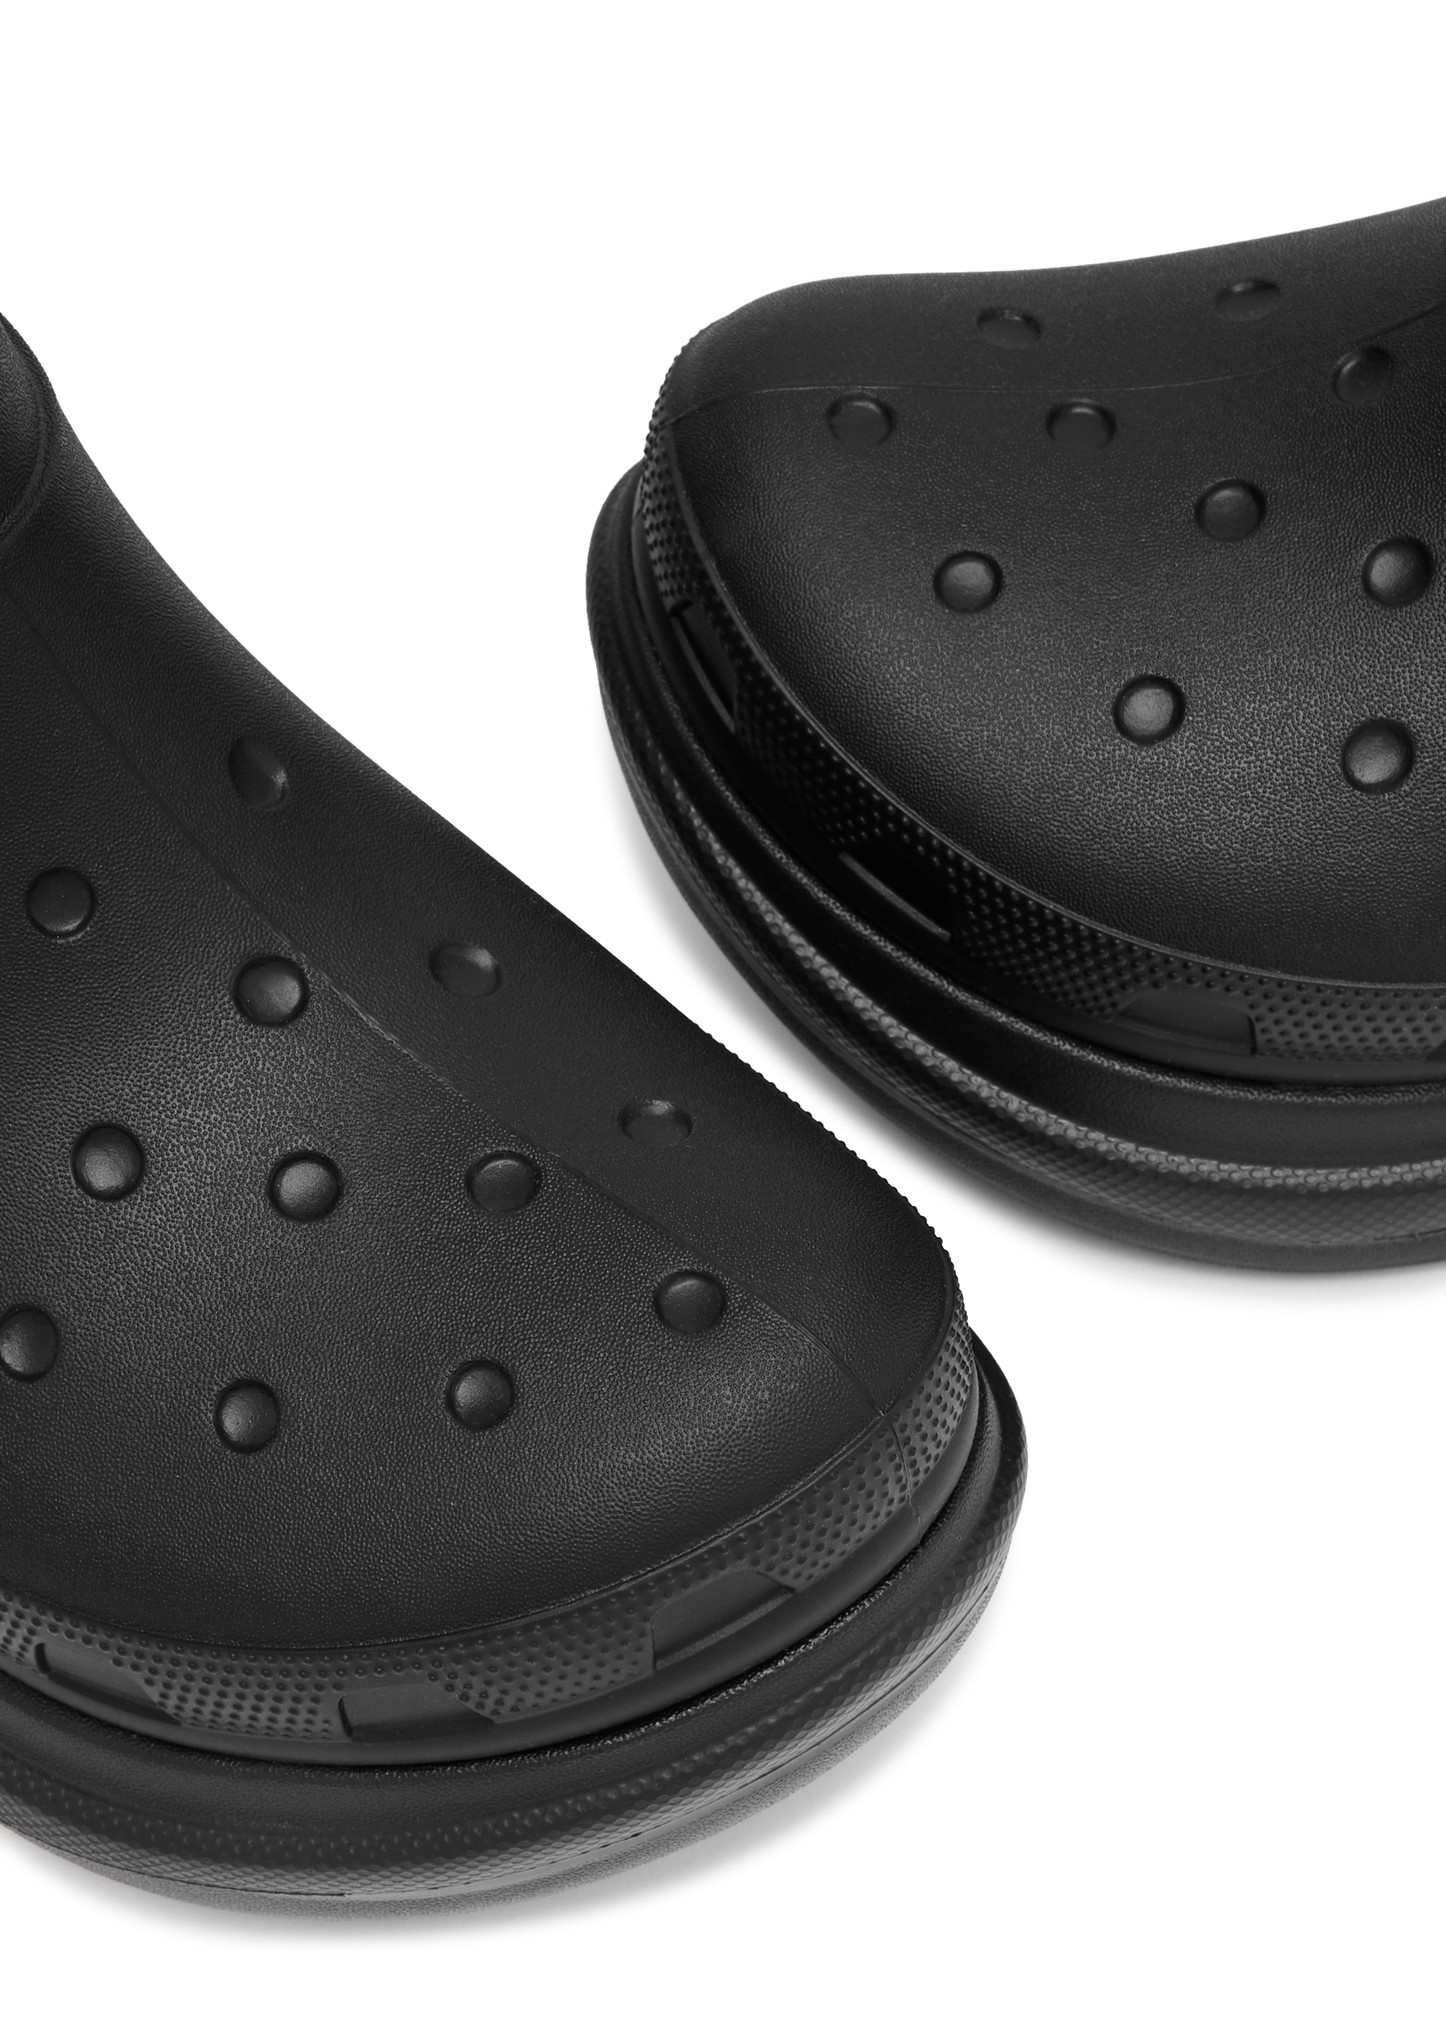 X Crocs rubber boots - 3